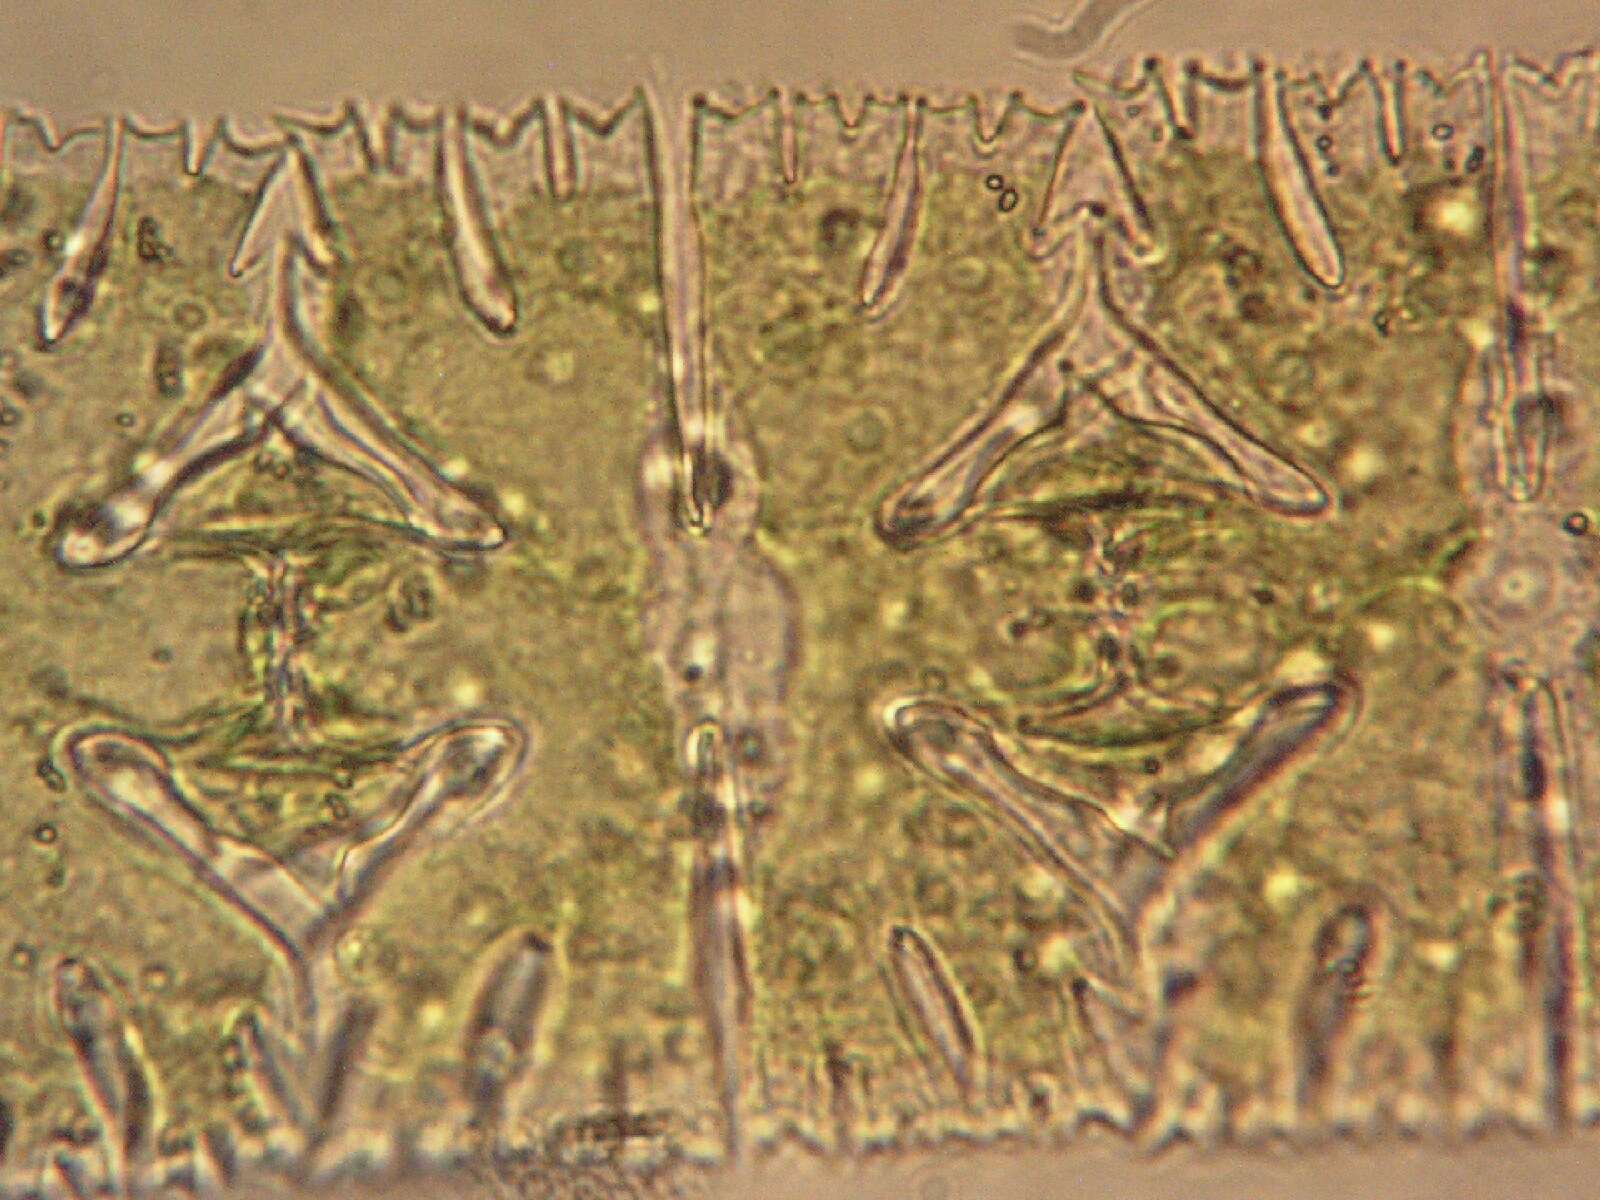 Image of Micrasterias foliacea